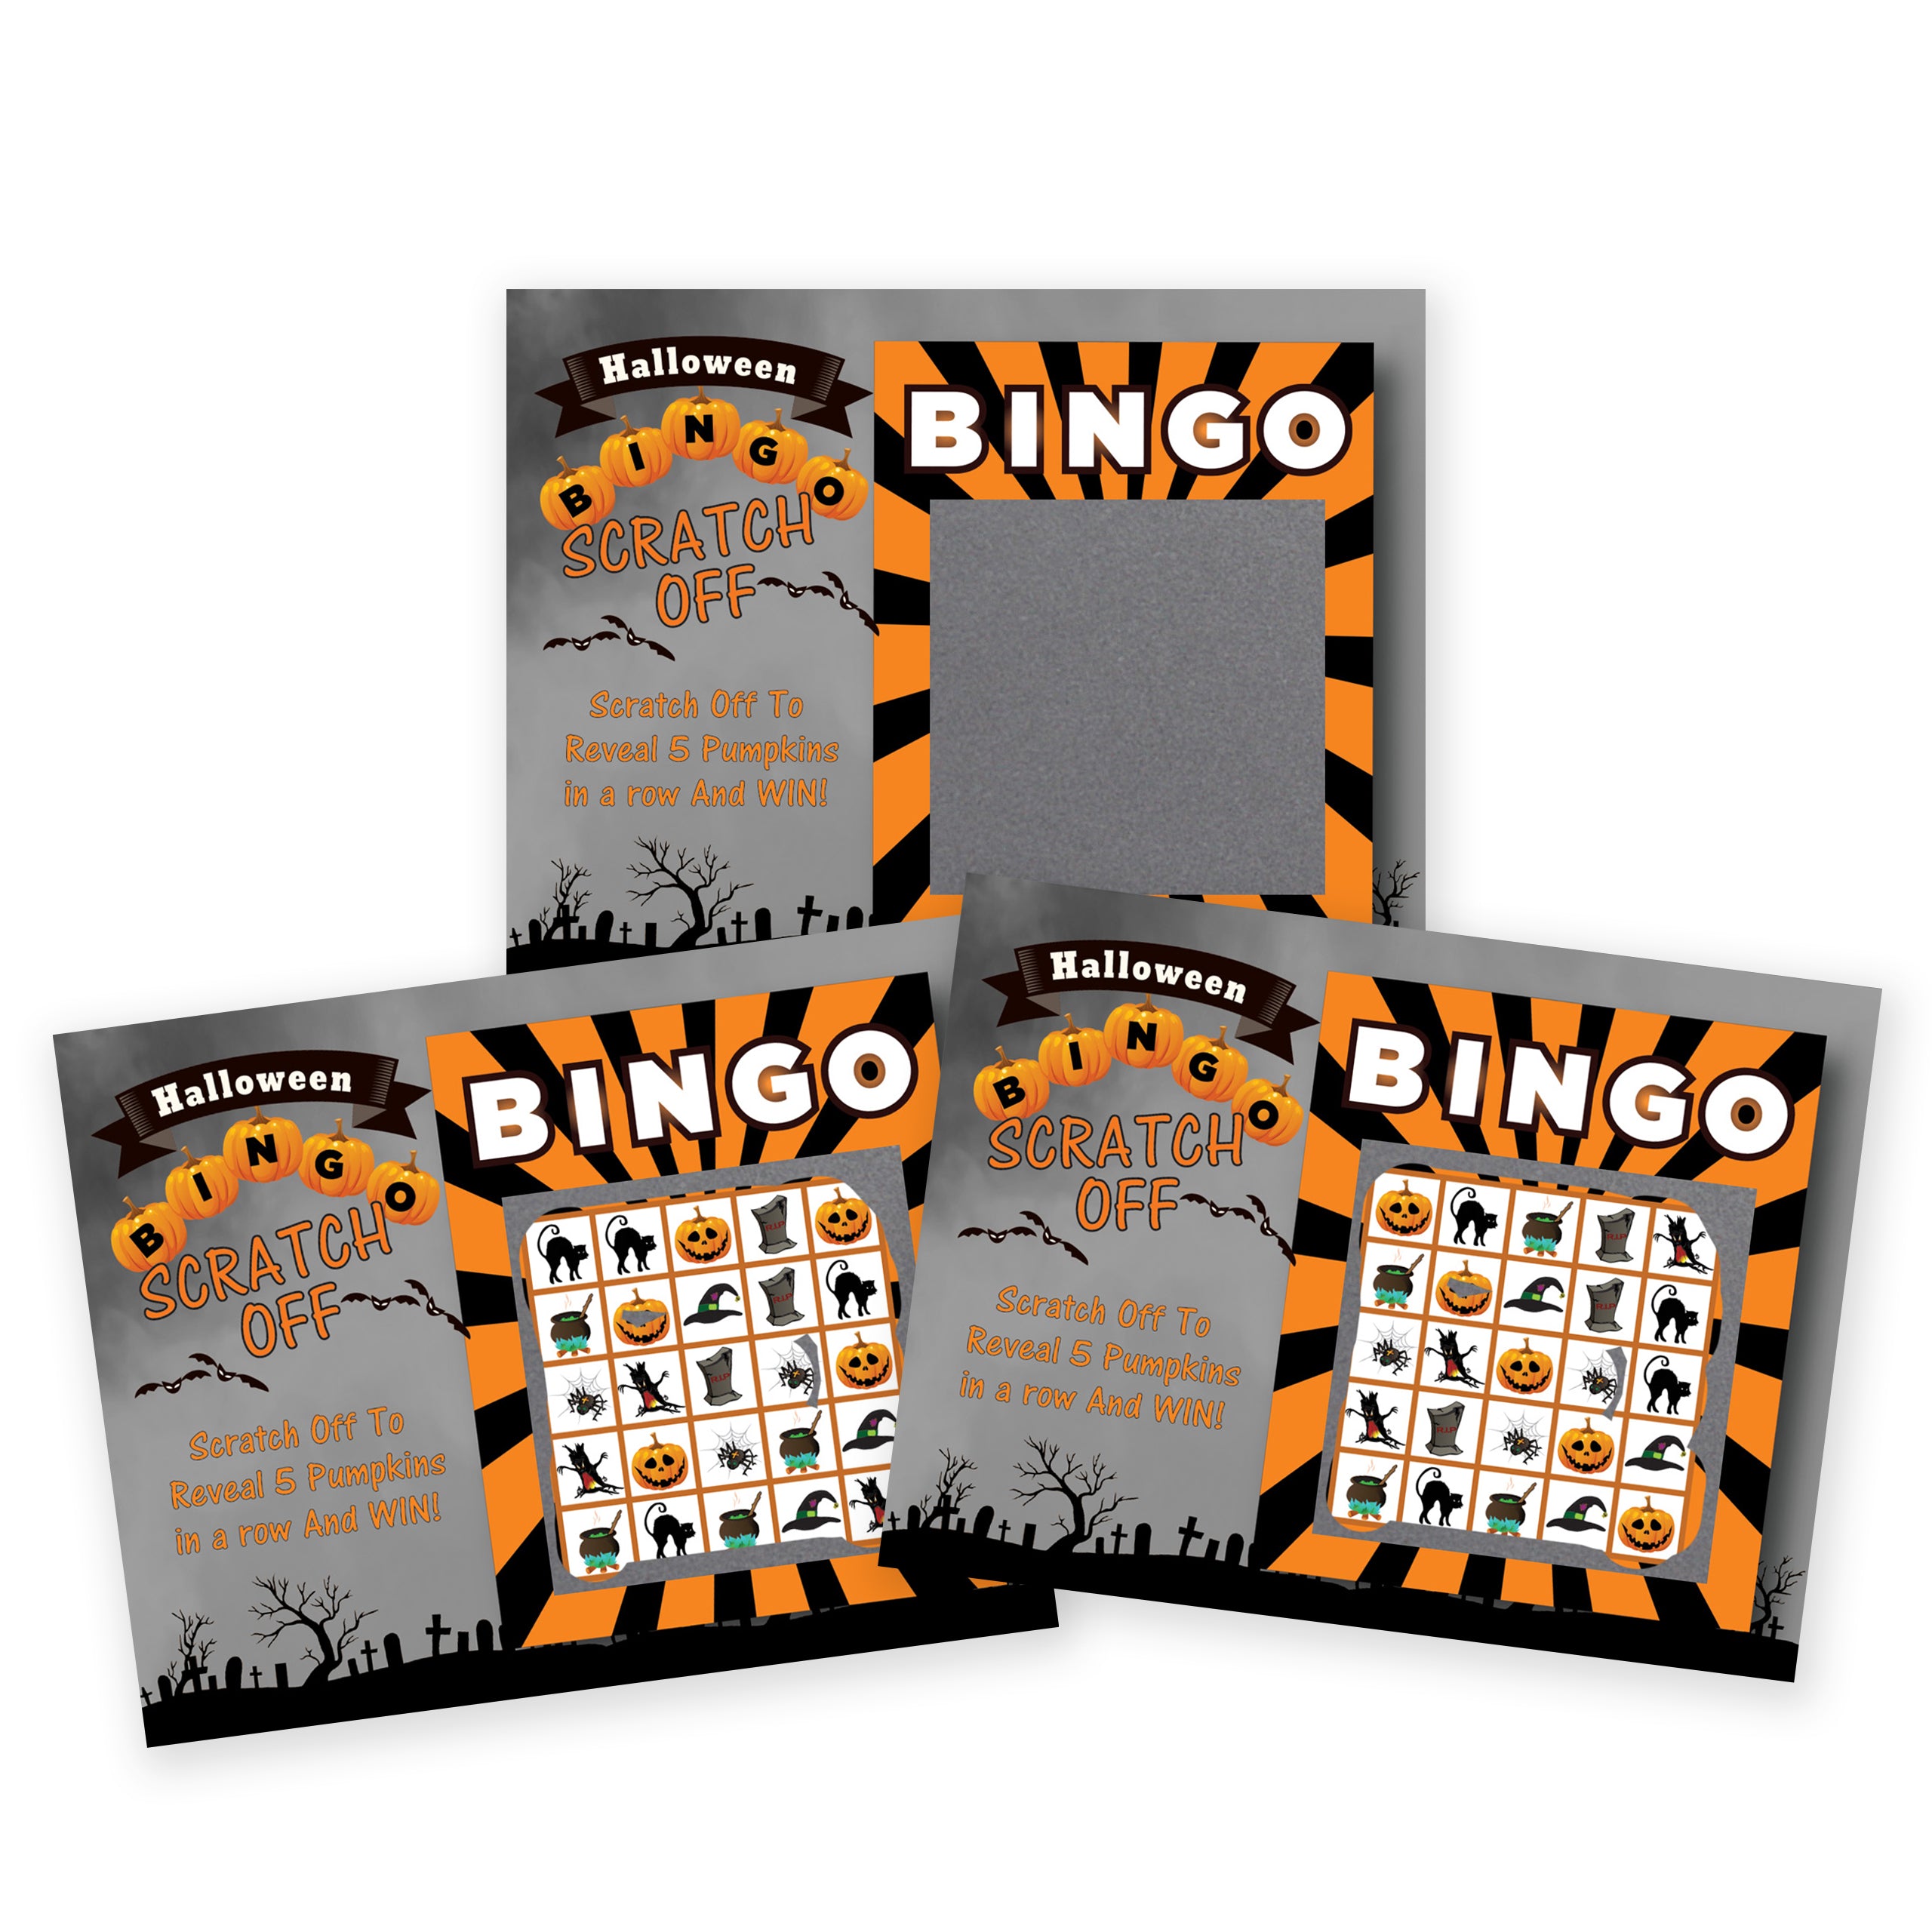 Halloween BINGO Scratch Off Game 26 Pack - 2 Bingo and 24 Non-Bingo Cards - My Scratch Offs